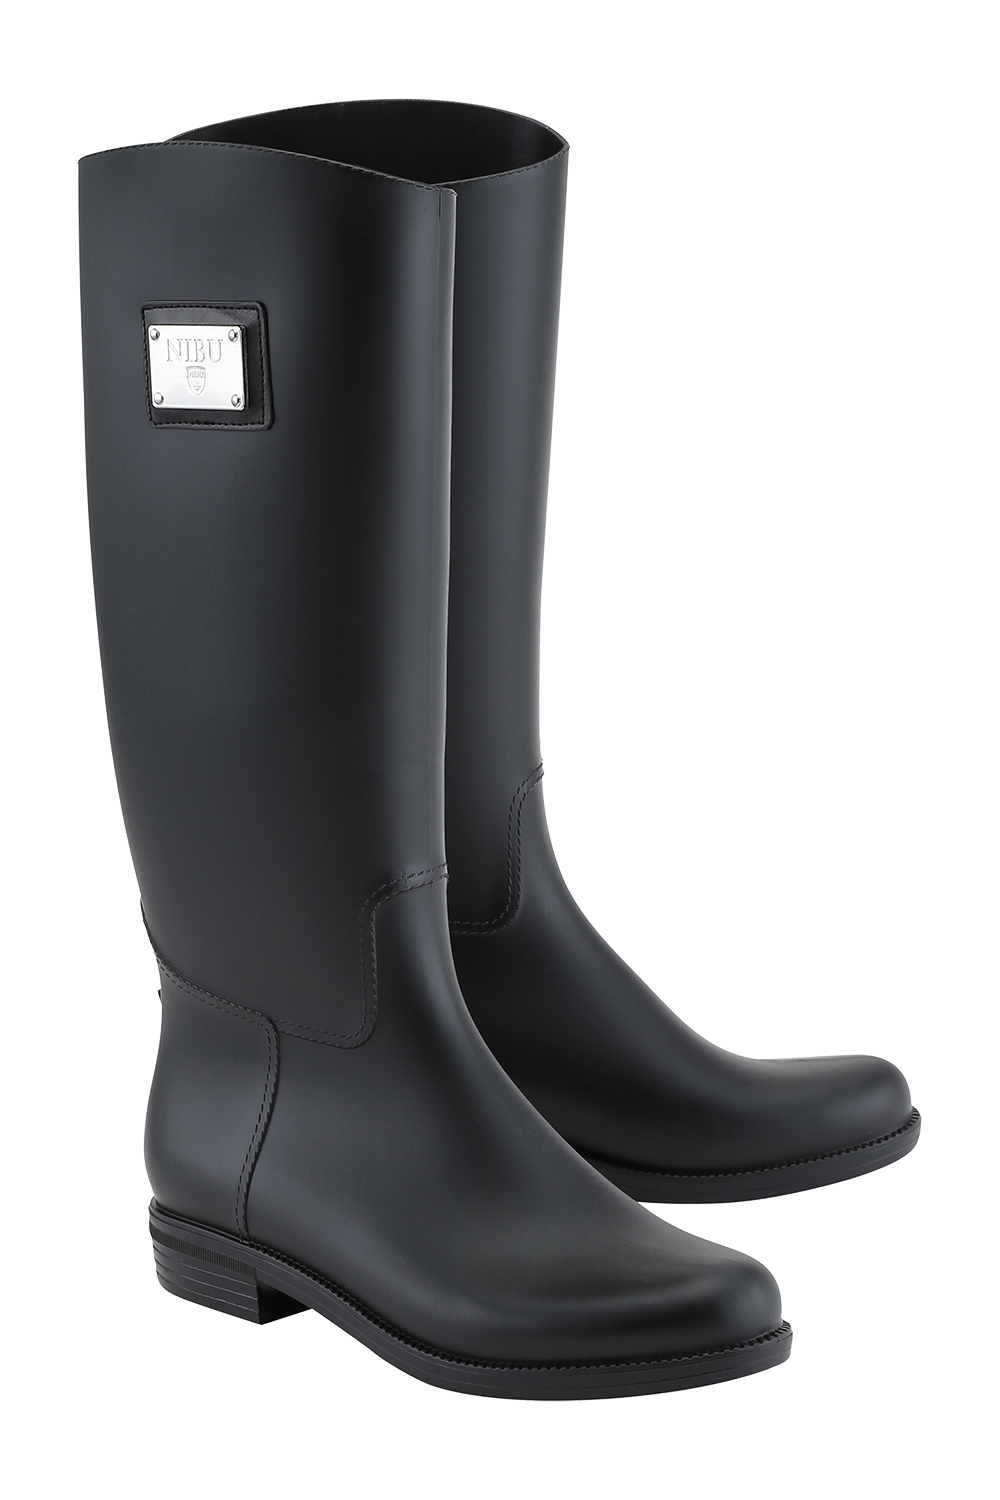 Black Rain Boots PNG Pic